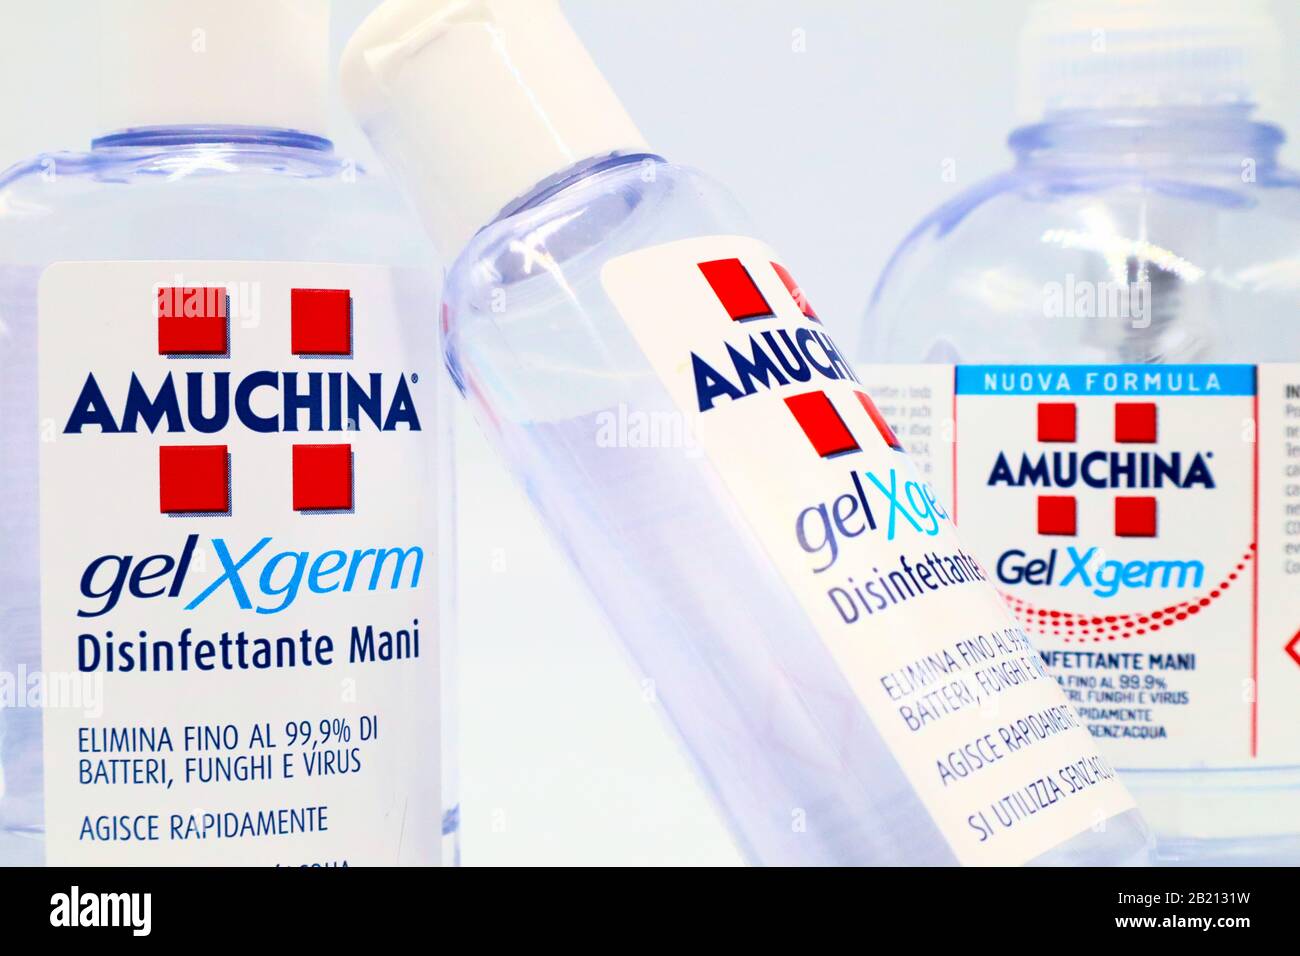 AMUCHINA Gel XGERM Hand Sanitizer Editorial Stock Photo - Image of